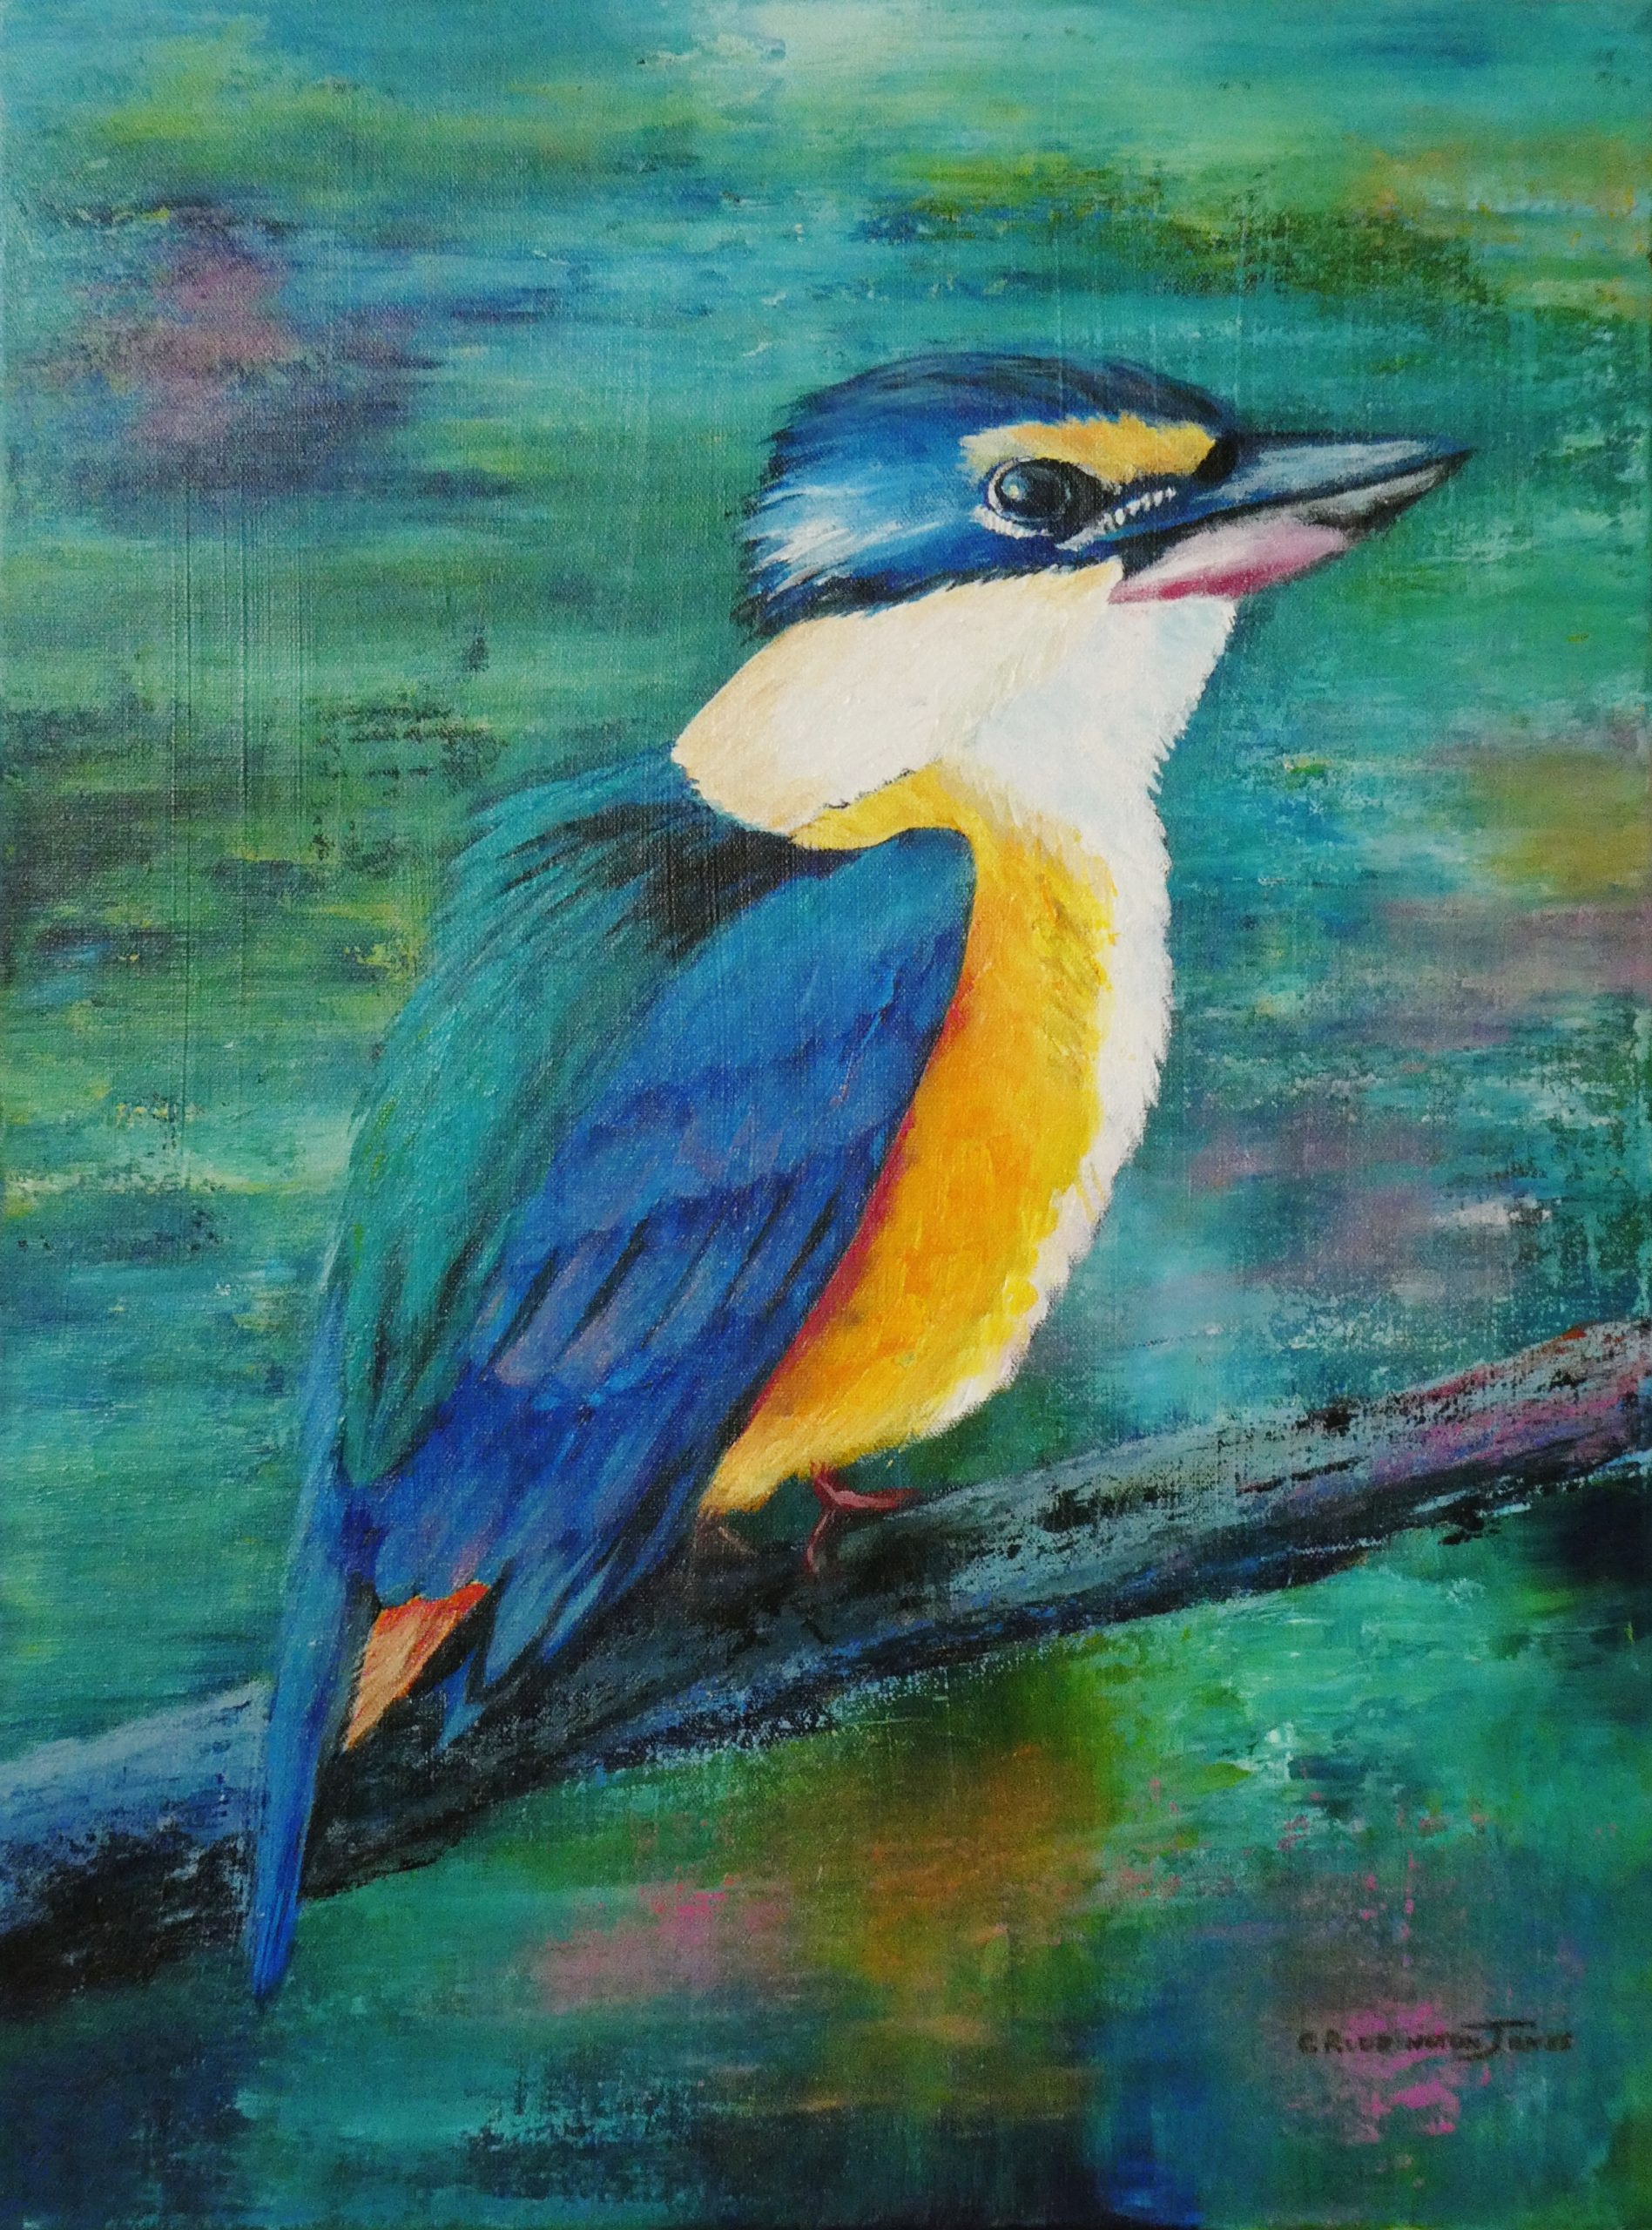 Sacred Kingfisher painting by Clare Riddington Jones, 50cm x 60cm